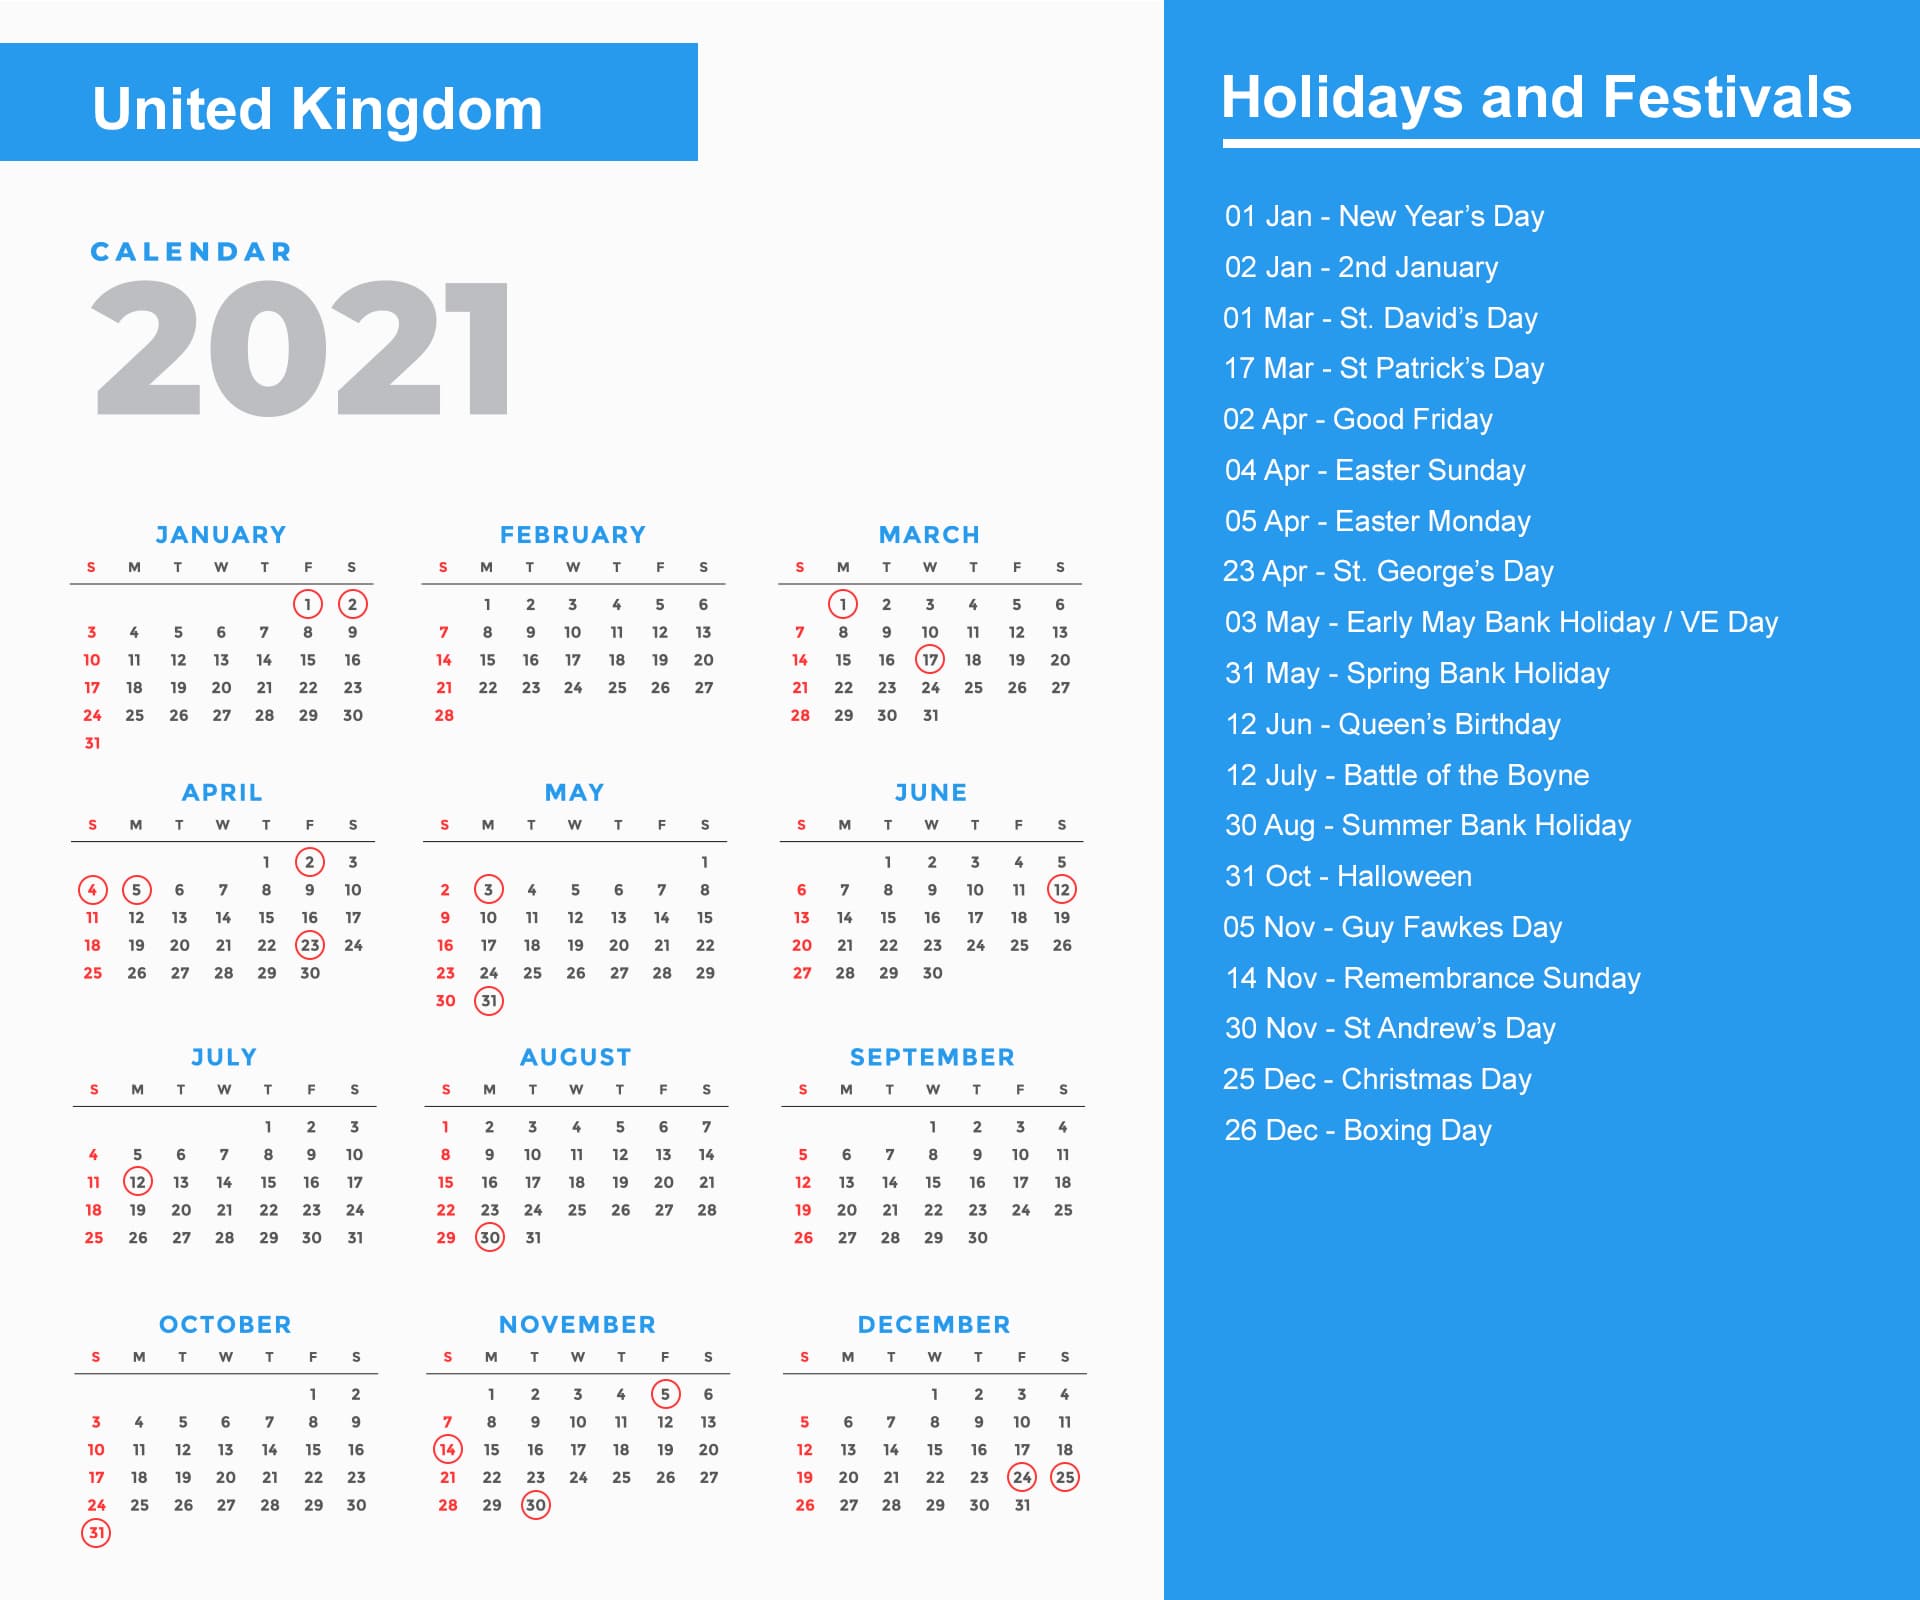 United Kingdom Holidays Calendar 2021